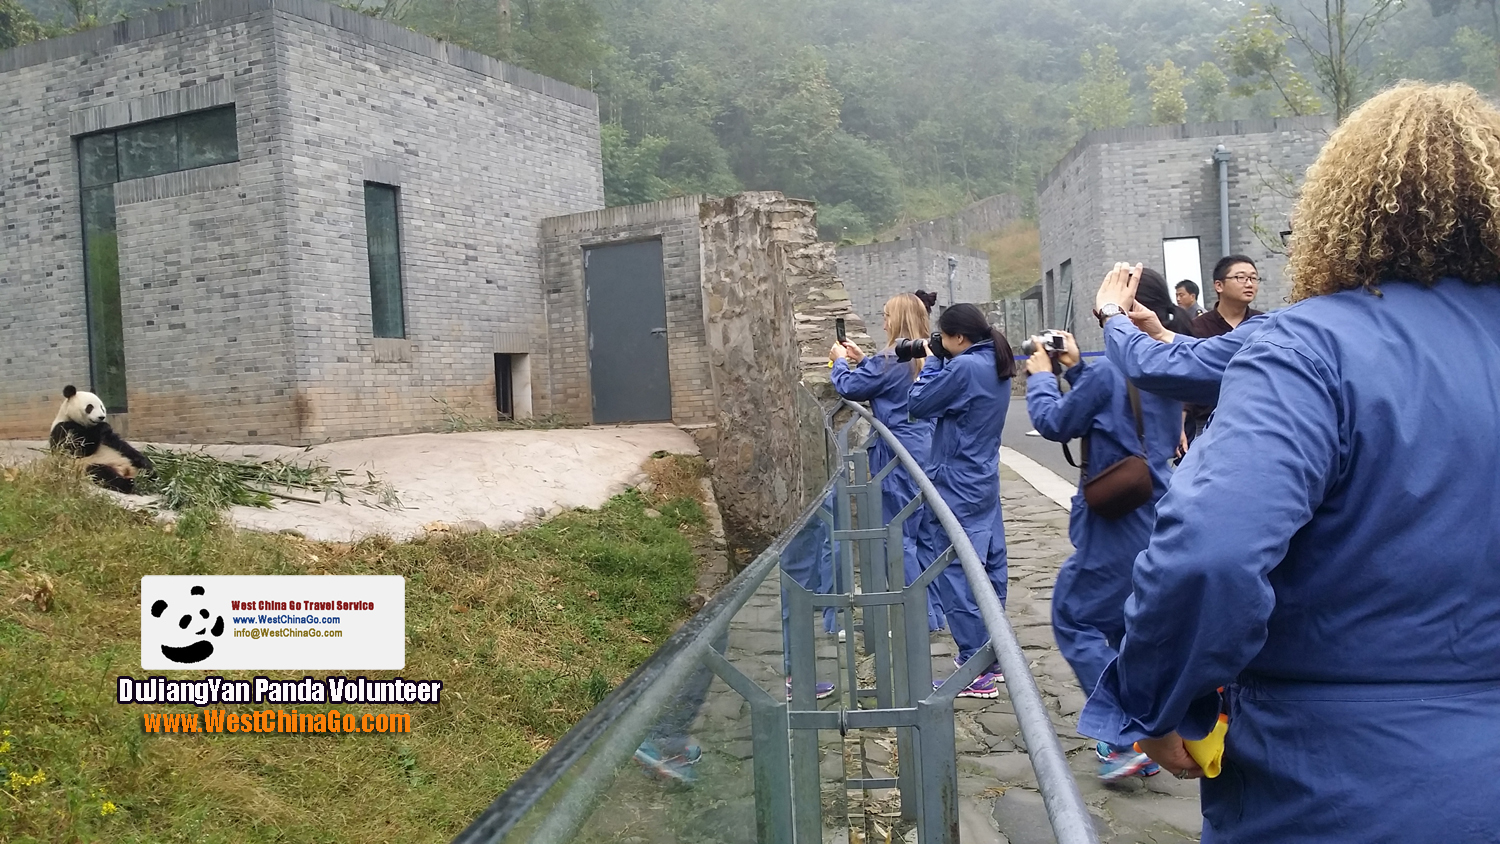 chengdu dujiangyan panda volunteer program